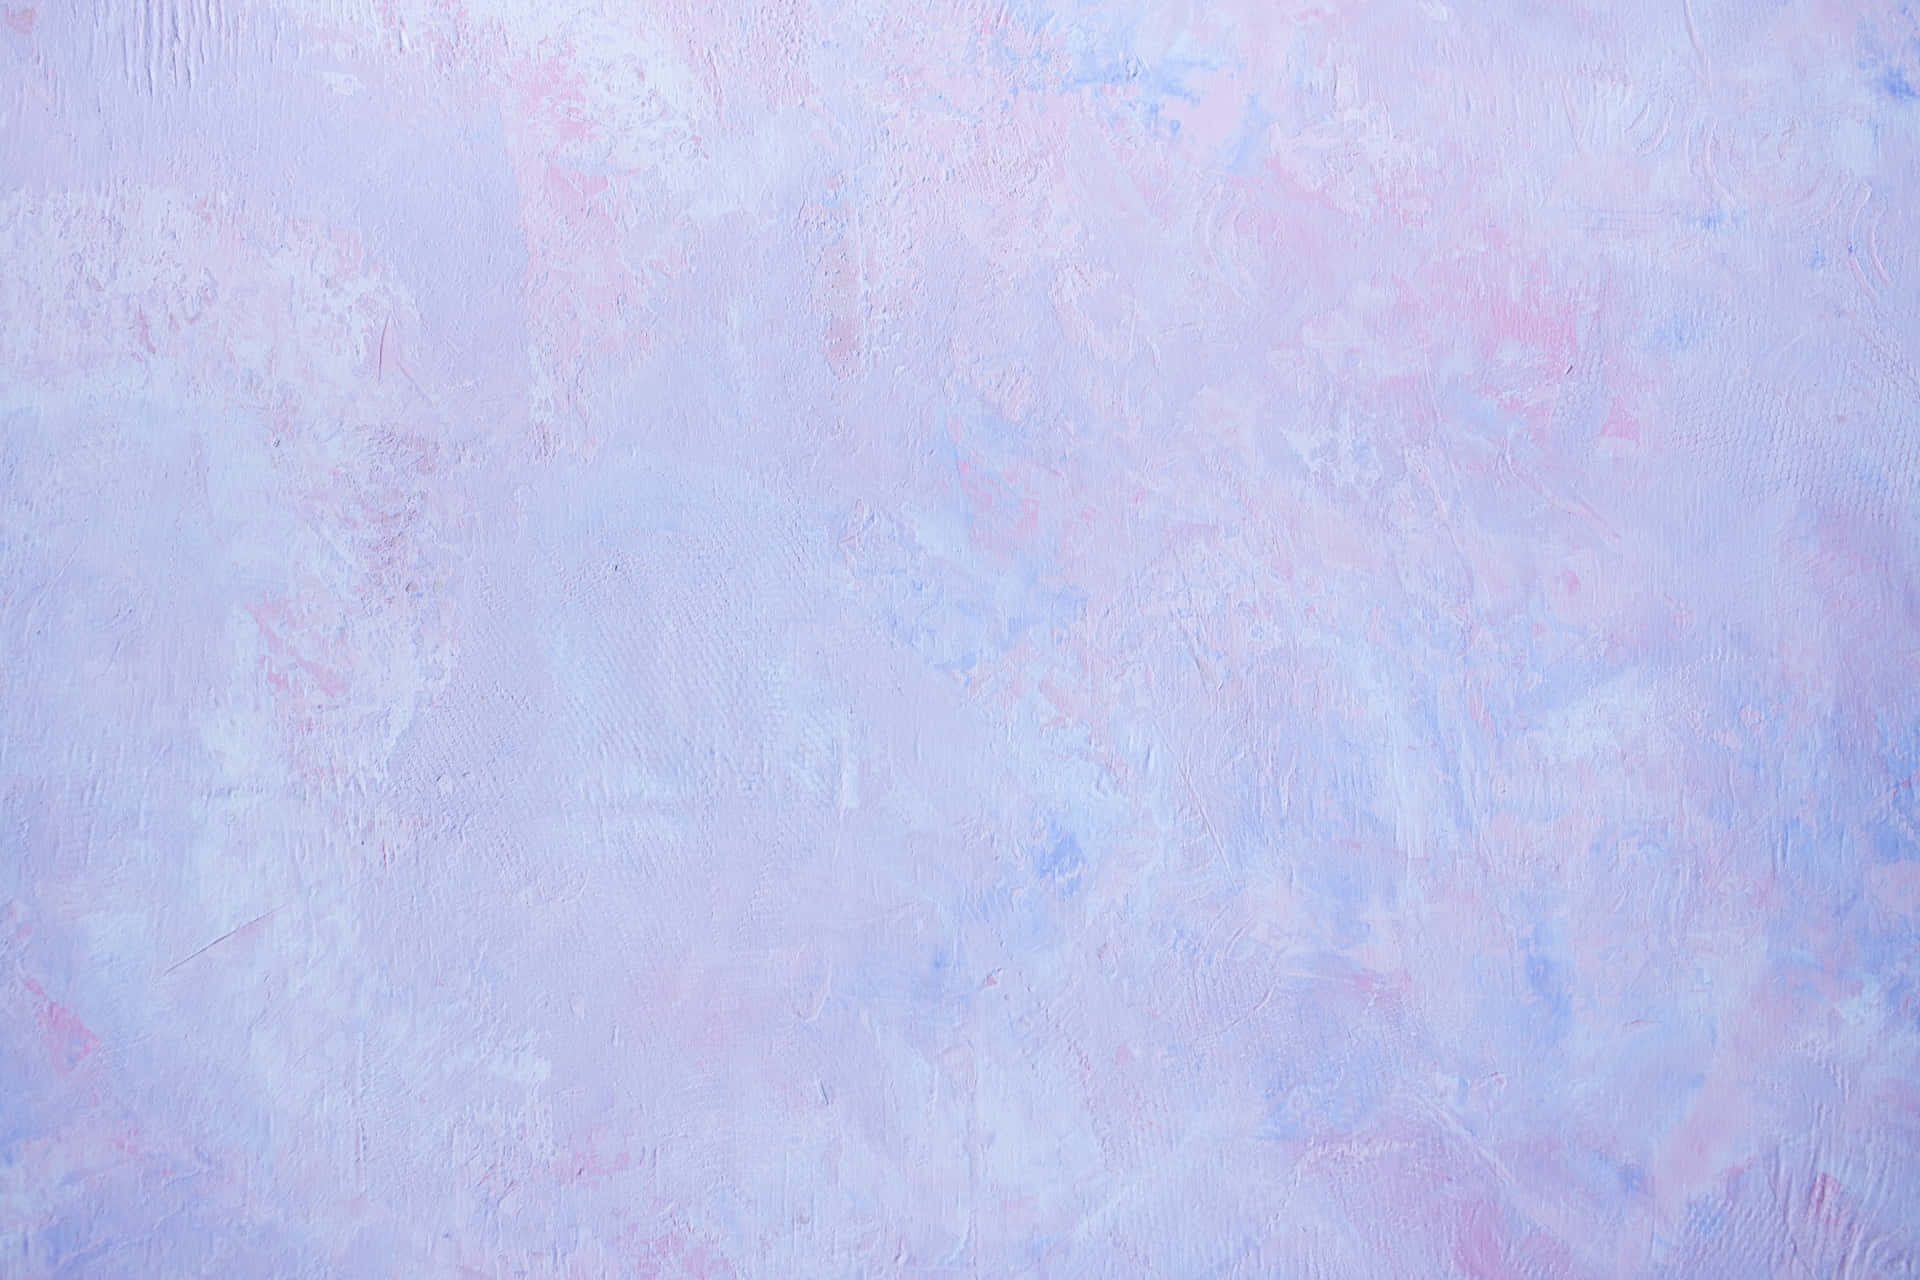 Aesthetic beauty of the purple hue. Wallpaper